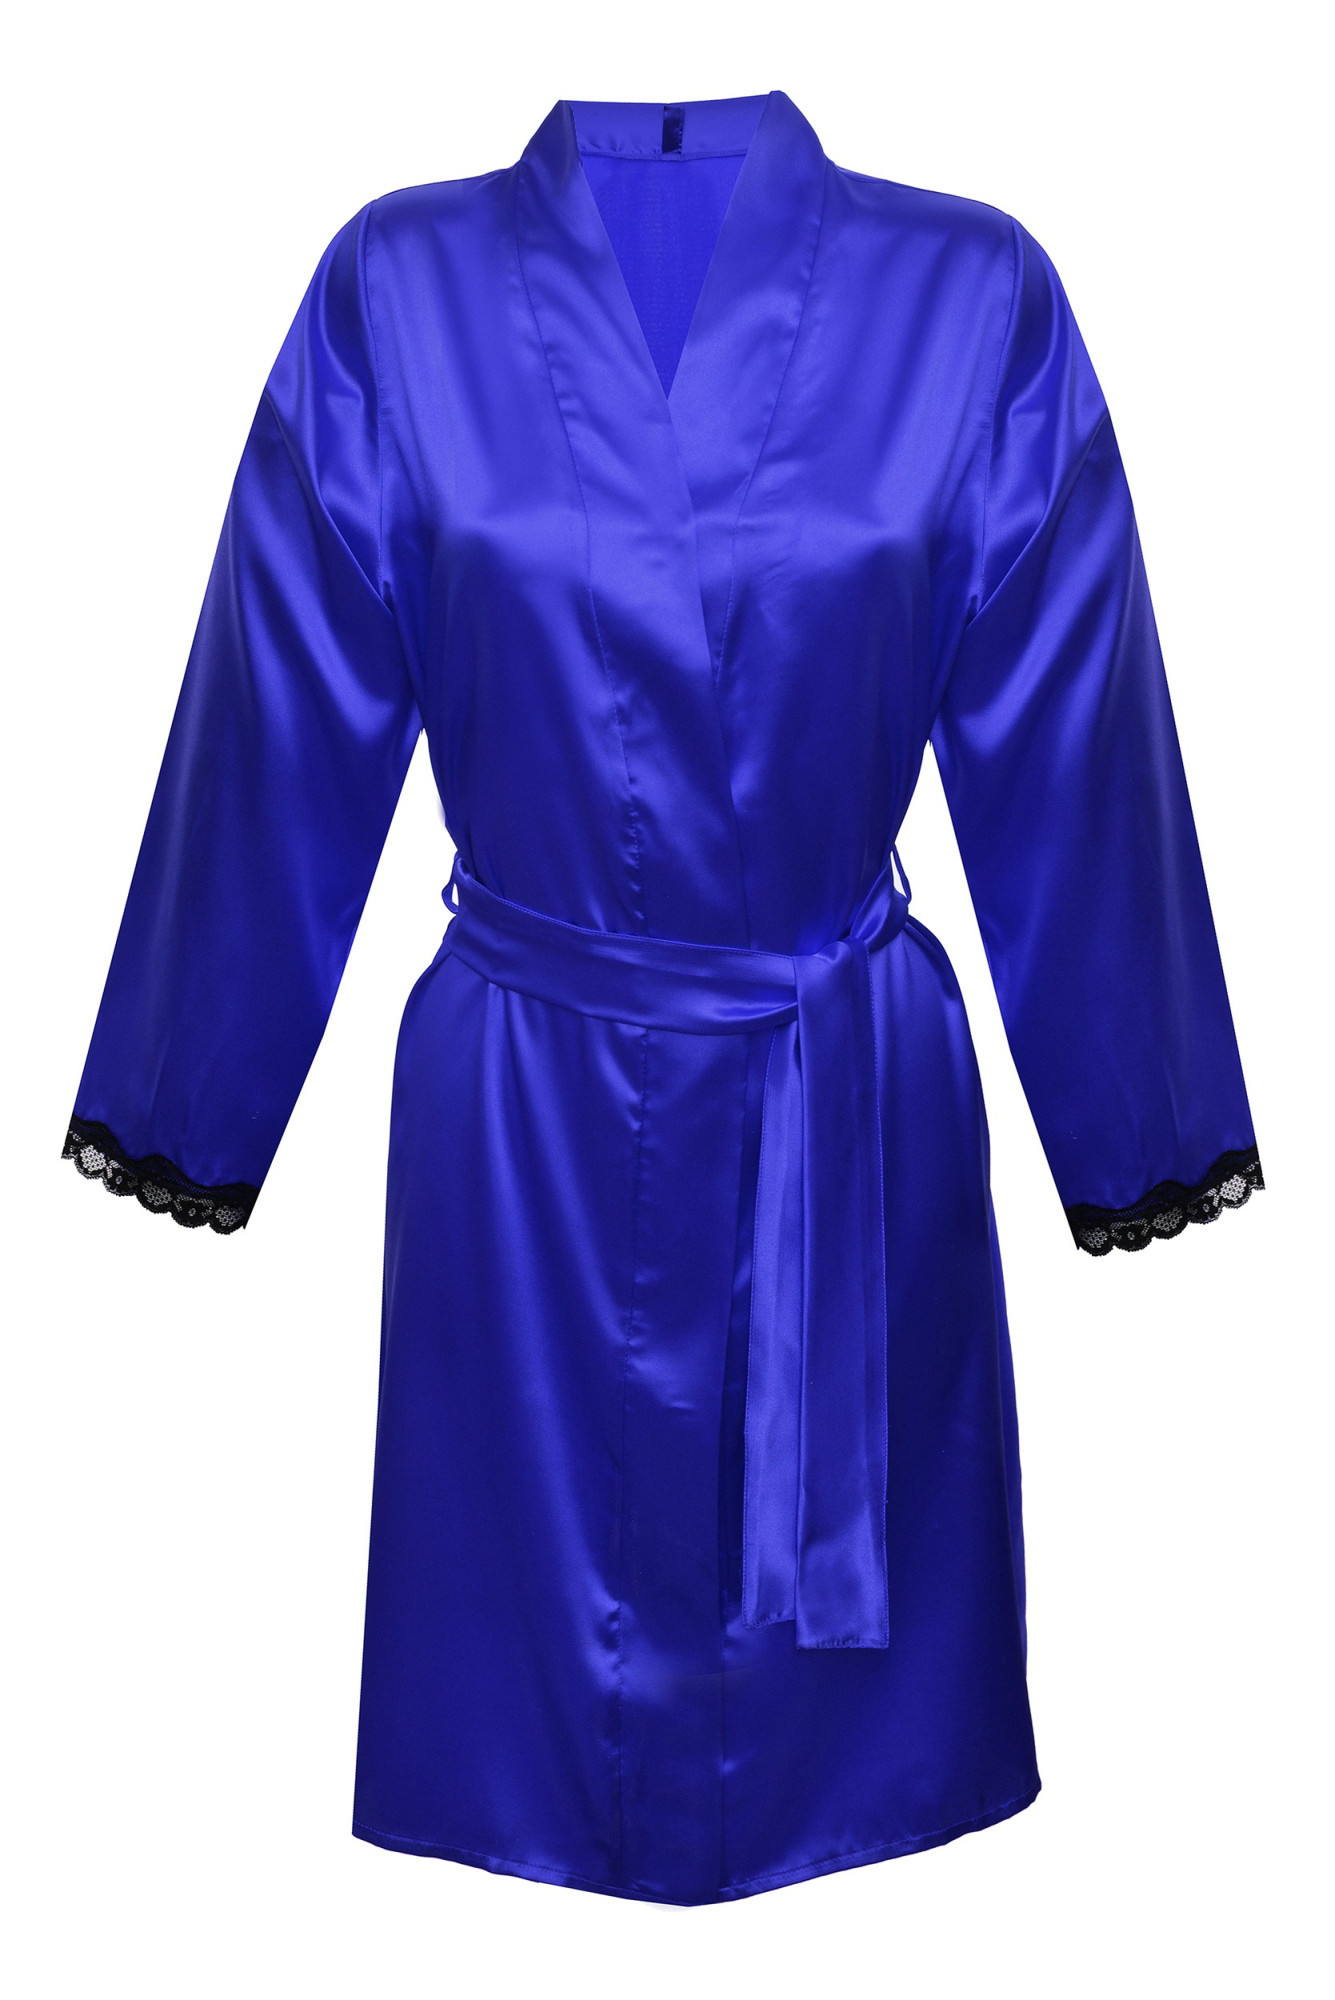 DKaren Housecoat Nancy Blue S Blue